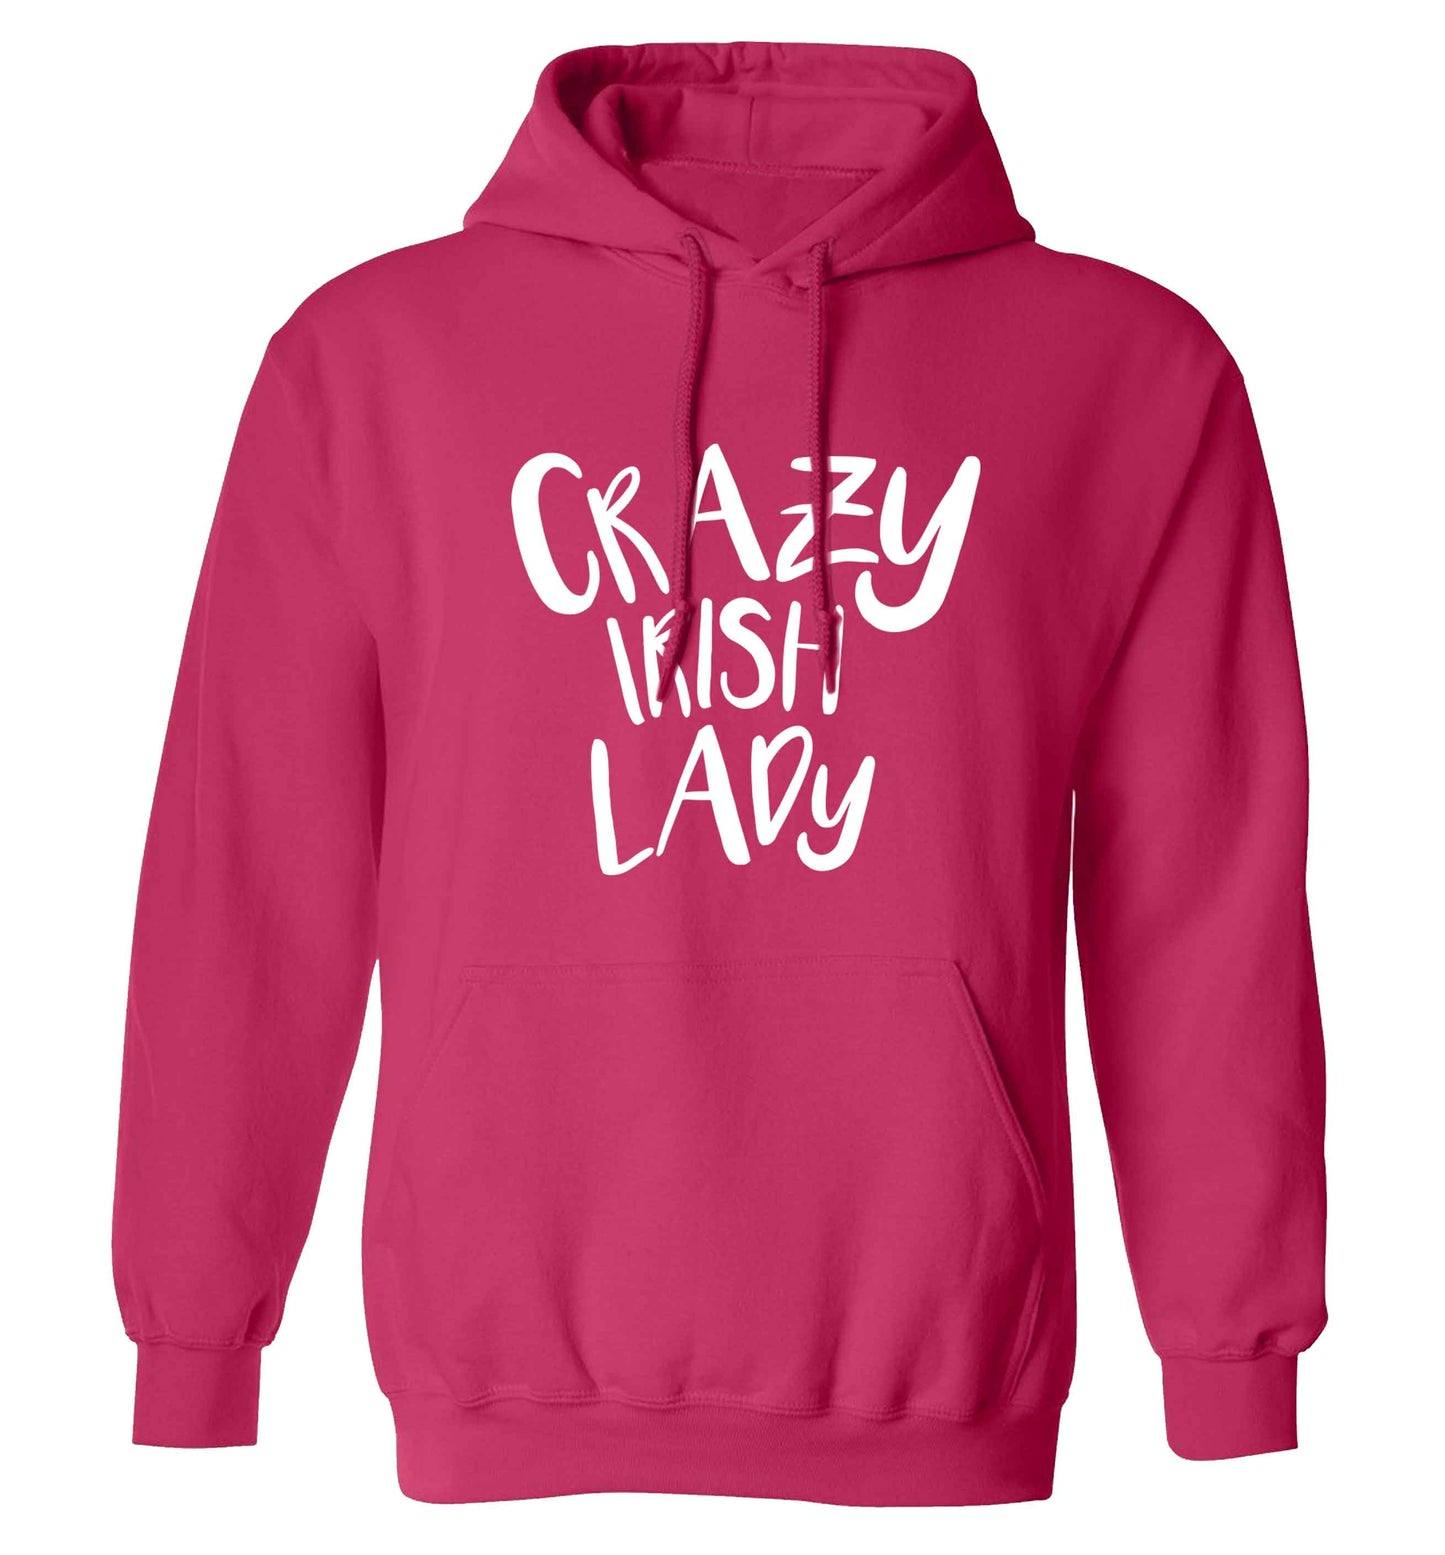 Crazy Irish lady adults unisex pink hoodie 2XL